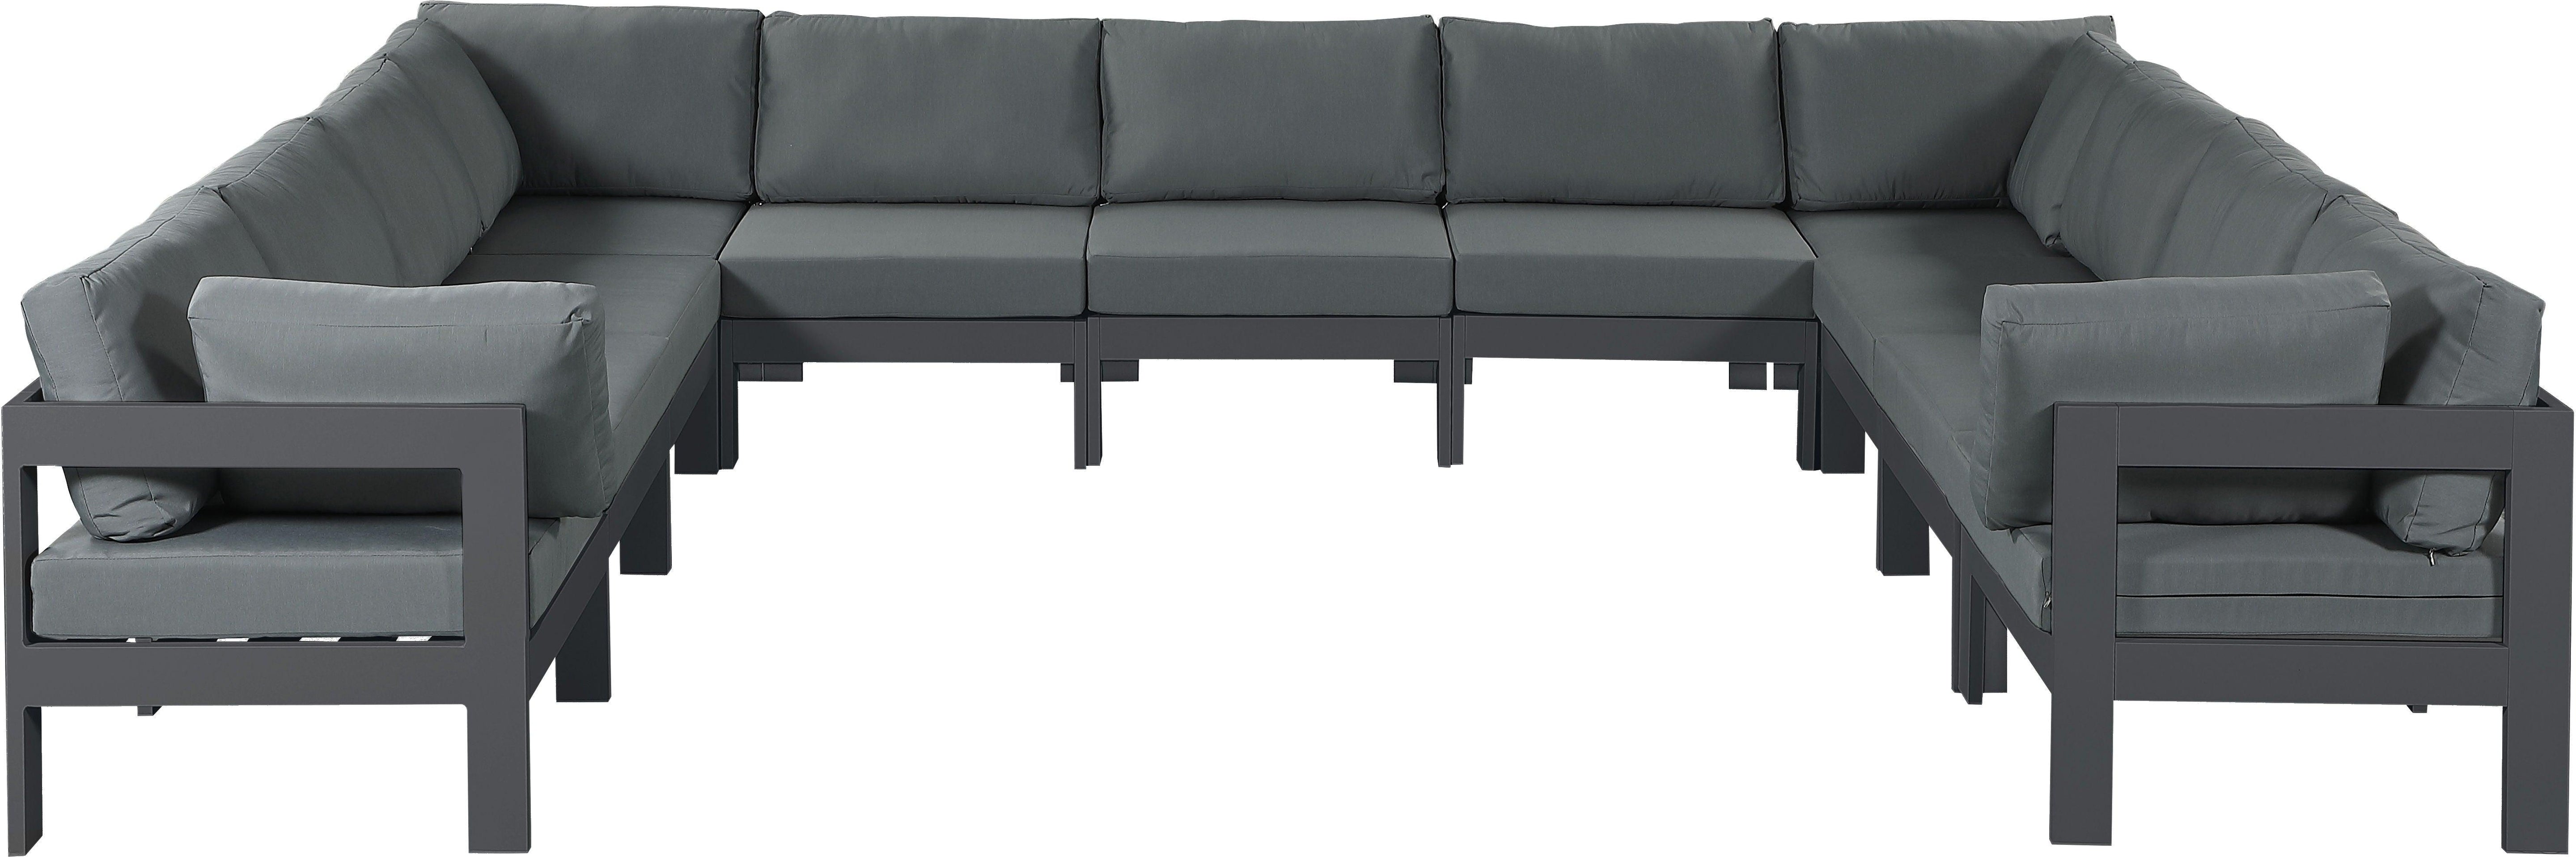 Meridian Furniture - Nizuc - Outdoor Patio Modular Sectional 11 Piece - Grey - 5th Avenue Furniture